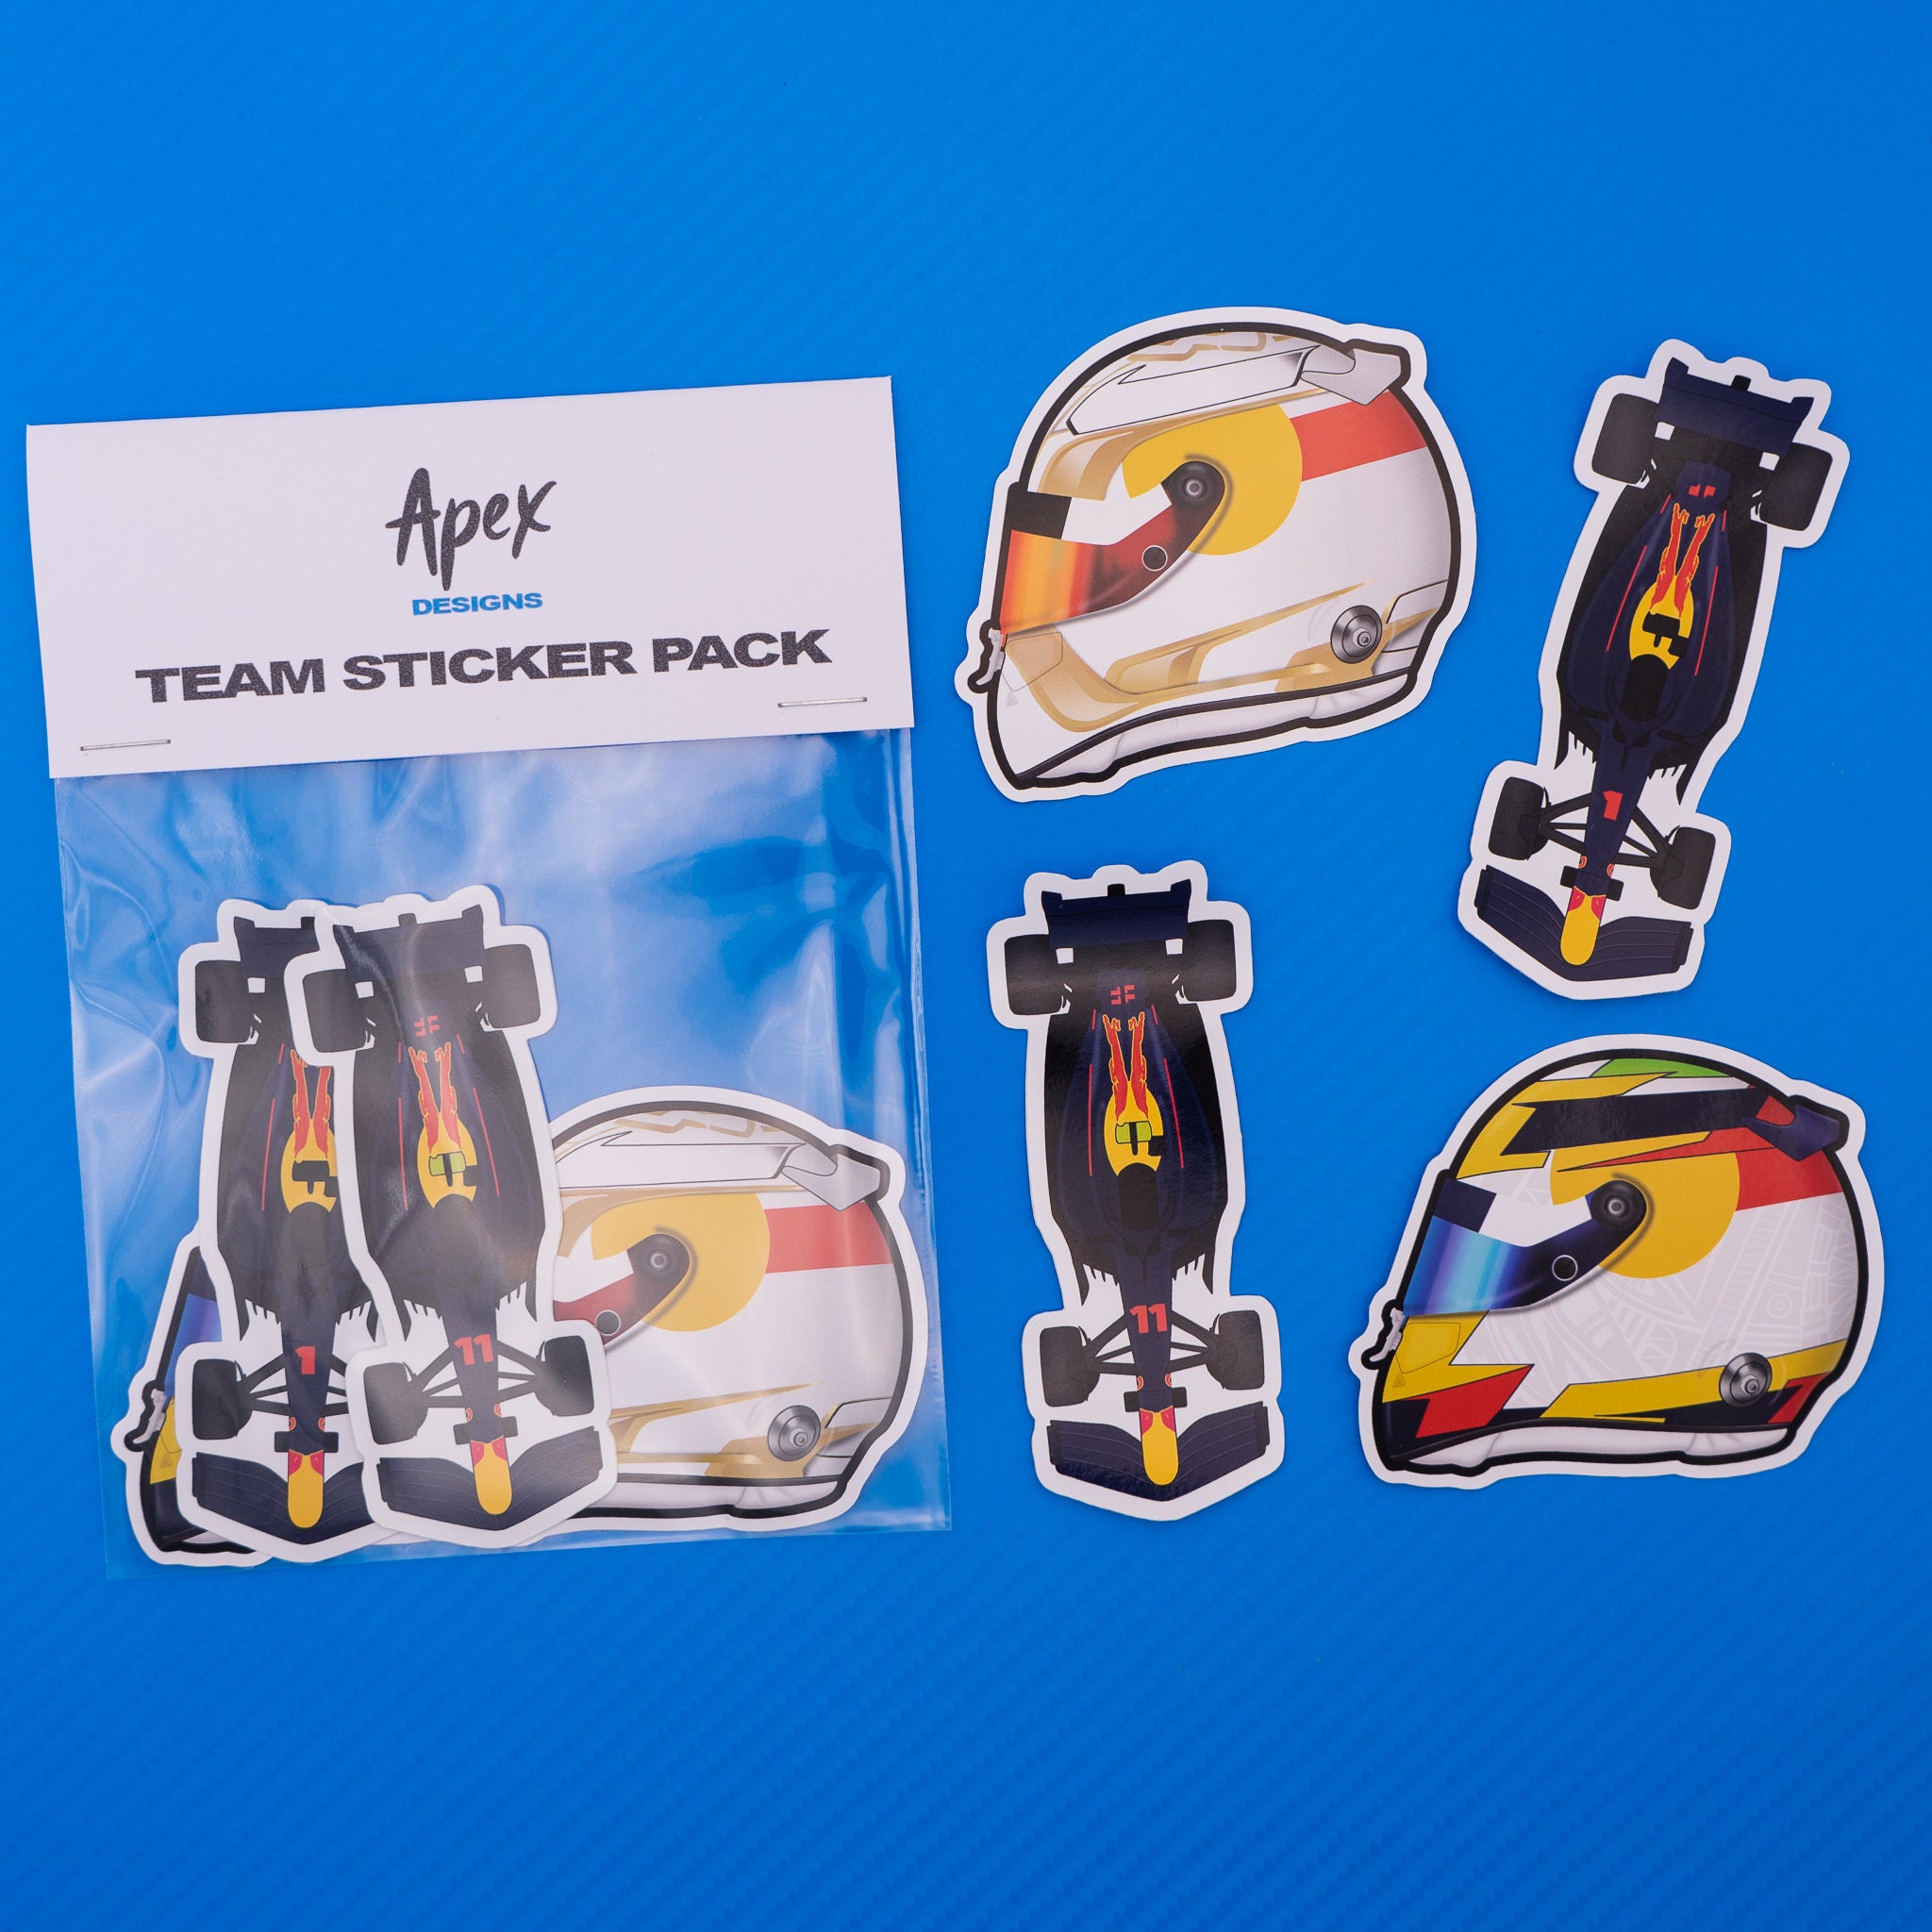 Kit 2 HRC 2023 Stickers + Honda RACING Written mm.110xmm.39 - Decals  Stickers Aufkleber Pegatinas MotoGP SBK Ferrari Red Bull